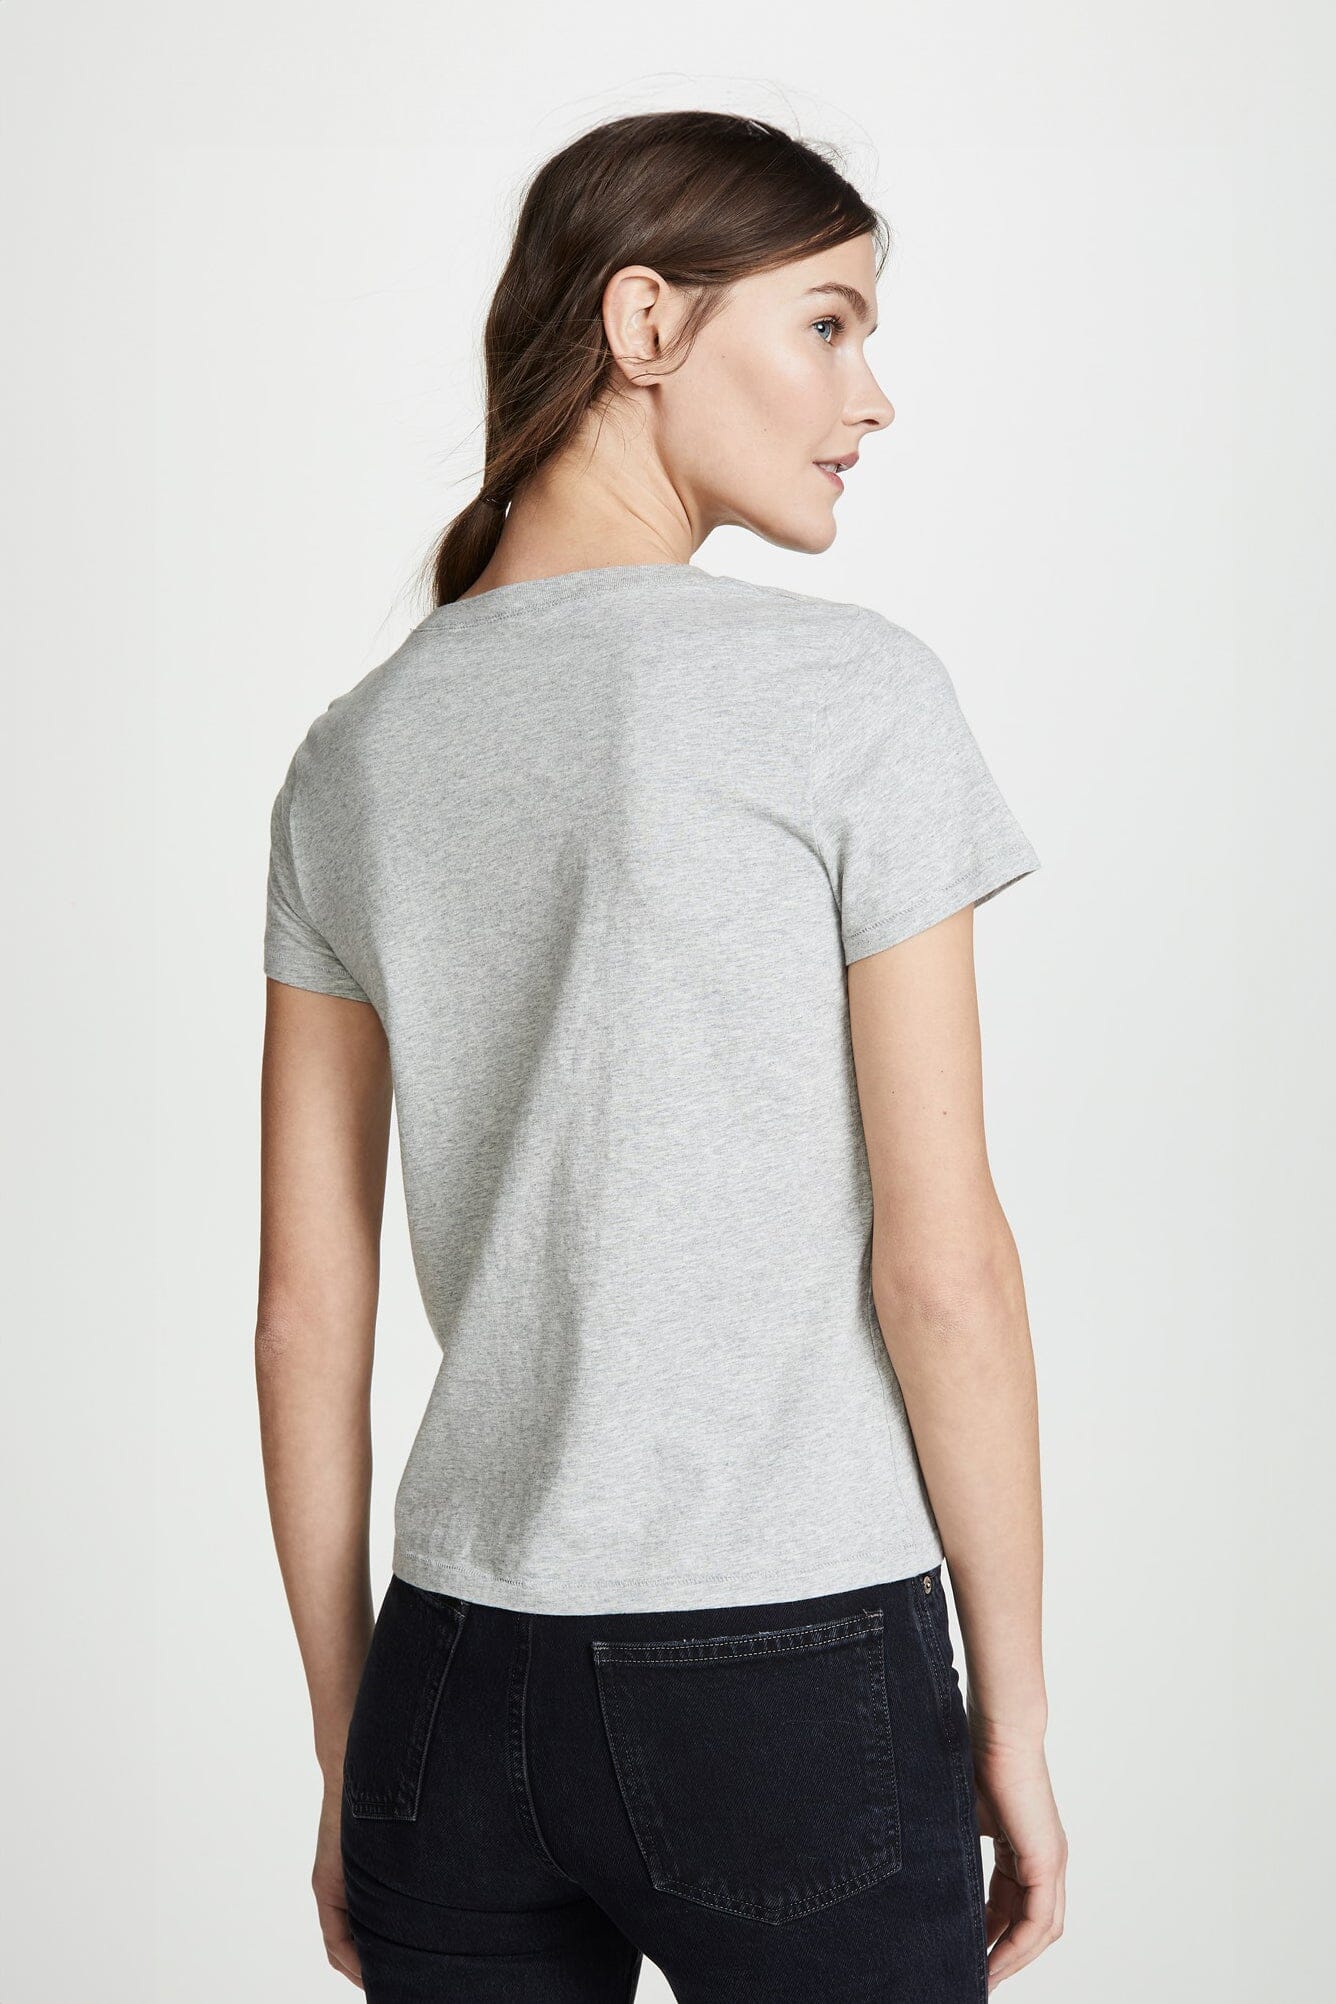 Berydale Women's Short-Sleeve Tee with Feminine Cut Neck: Pure BCI Combed Cotton Women's Tee Shirt Image 